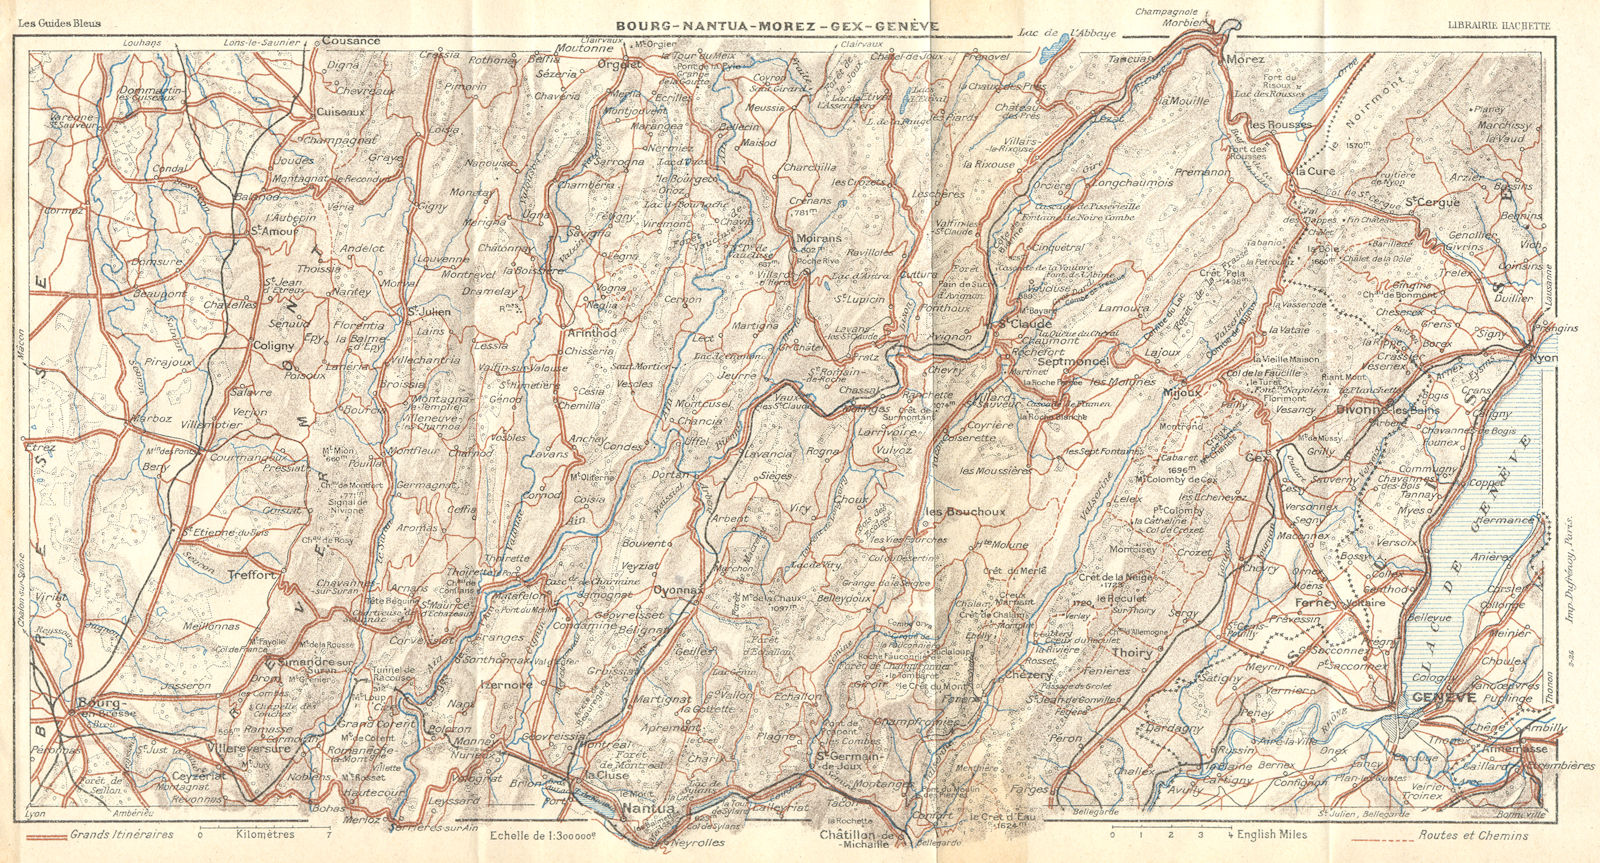 Associate Product FRANCE. Bourg-Nantua-Morez-Gex-Genève(Geneva) 1924 old vintage map plan chart